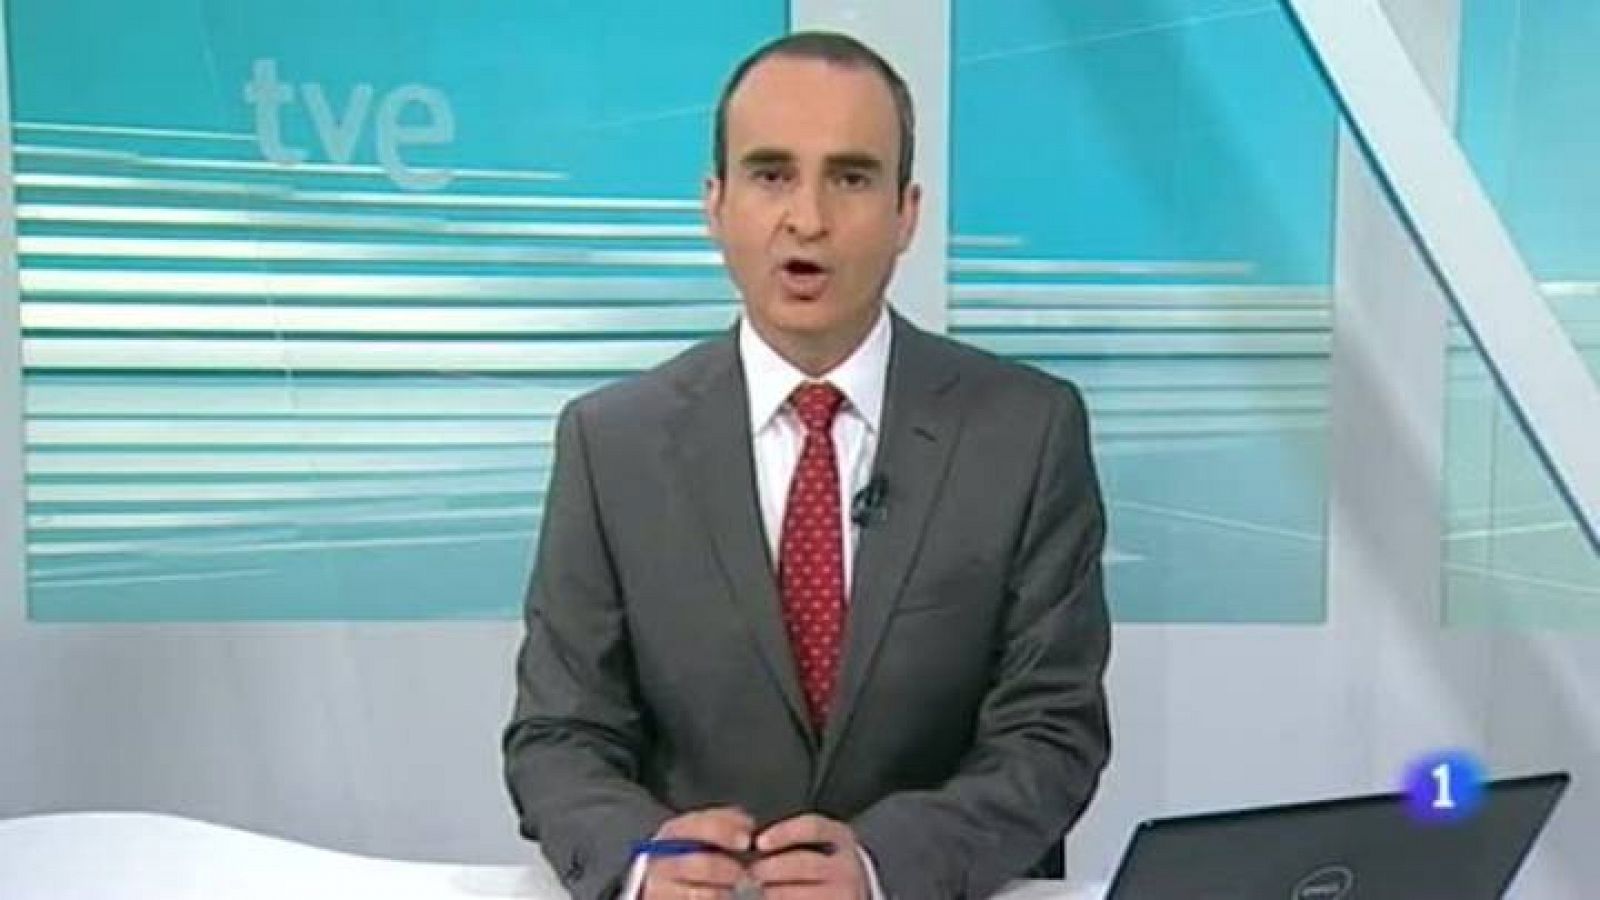 Noticias de Extremadura: Noticias de Extremadura 2 - 22/06/2015 | RTVE Play